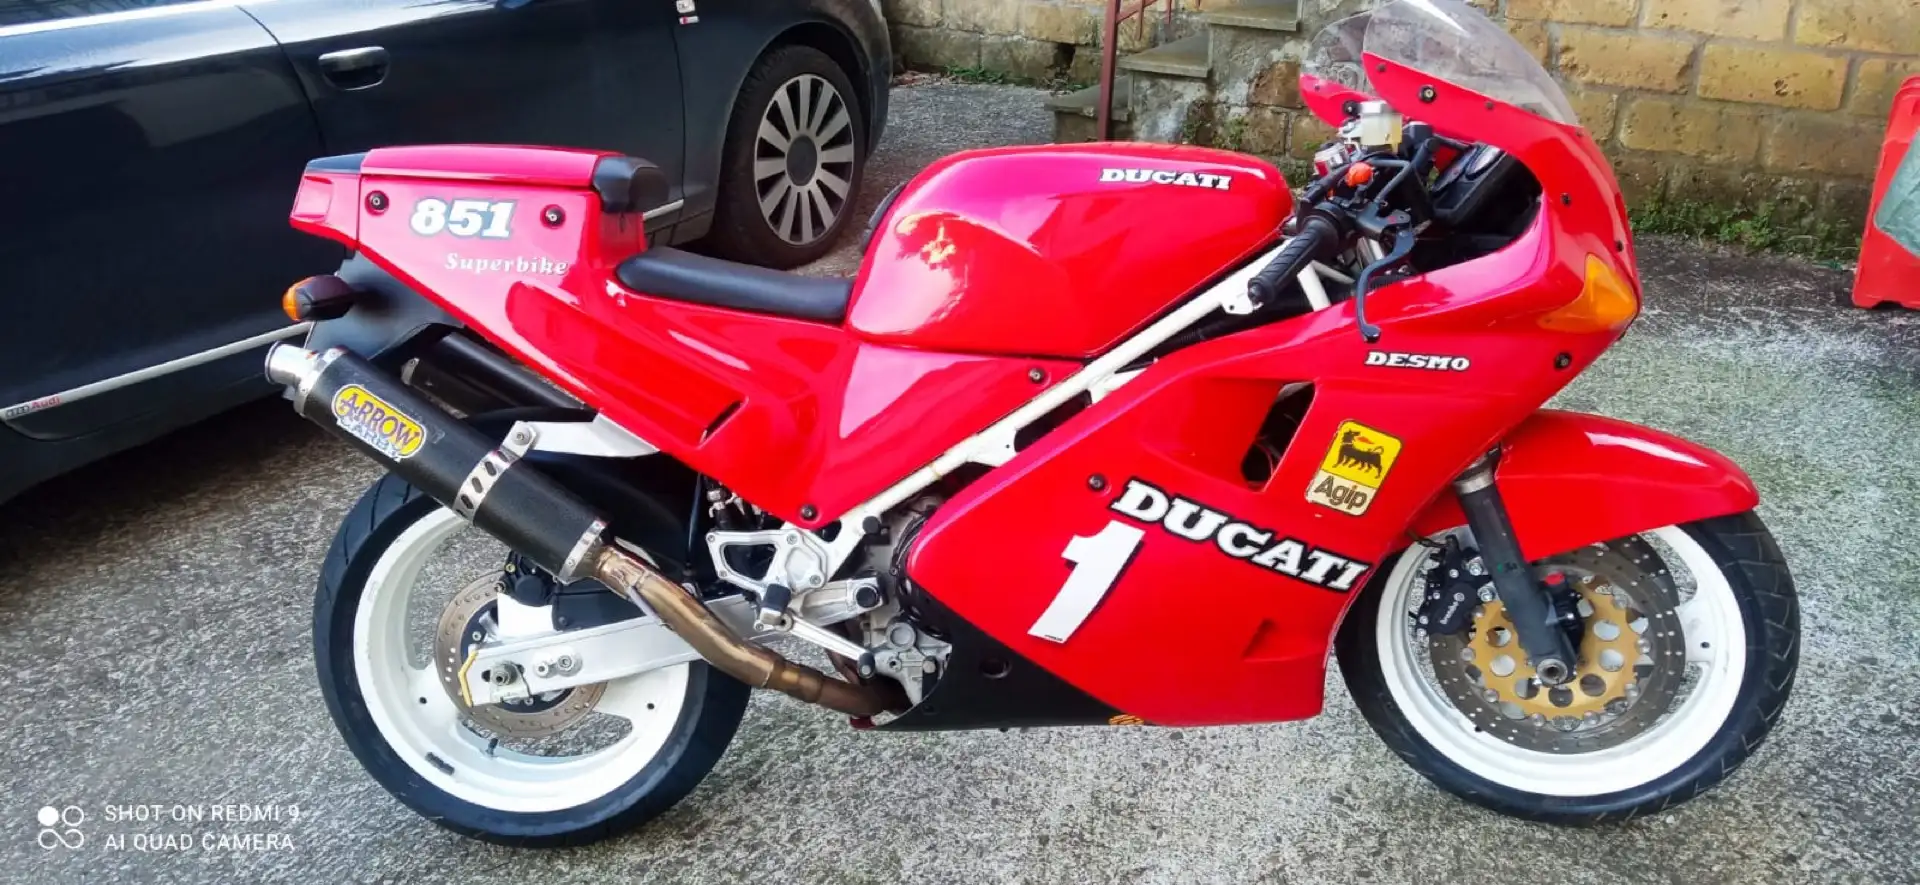 Ducati 851 superbike crvena - 2